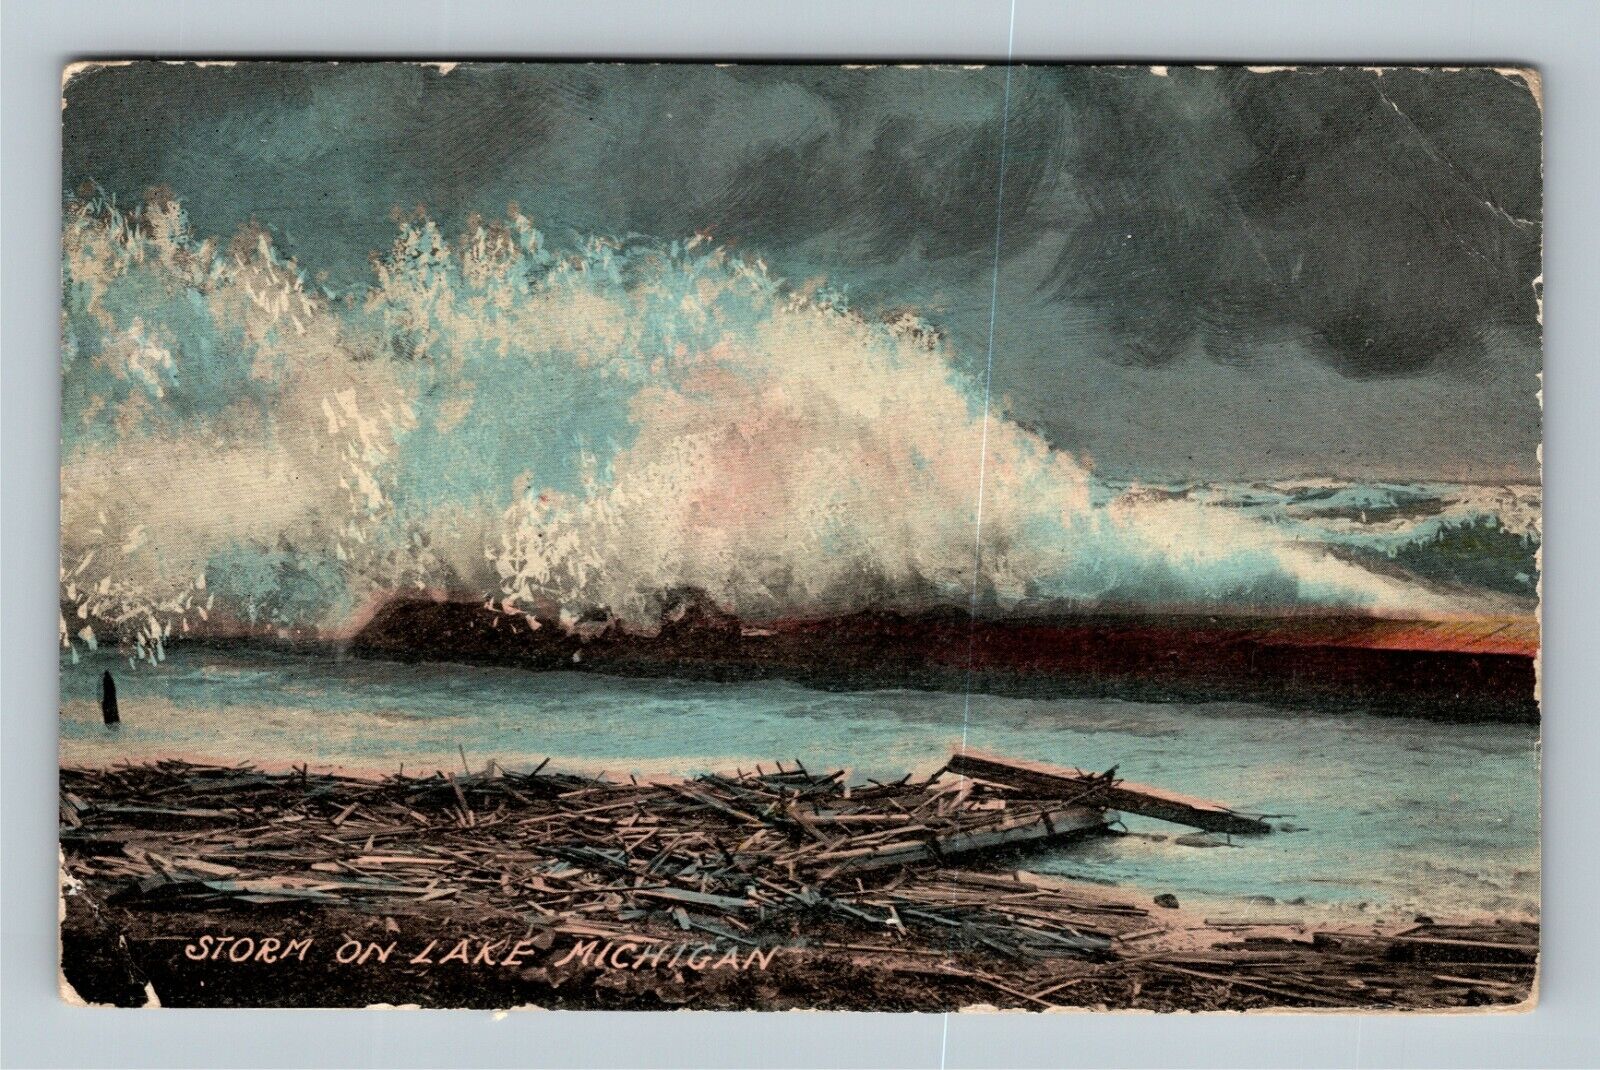 Lake Michigan, Storm On The Lake, Wood Debris, Michigan Vintage Postcard